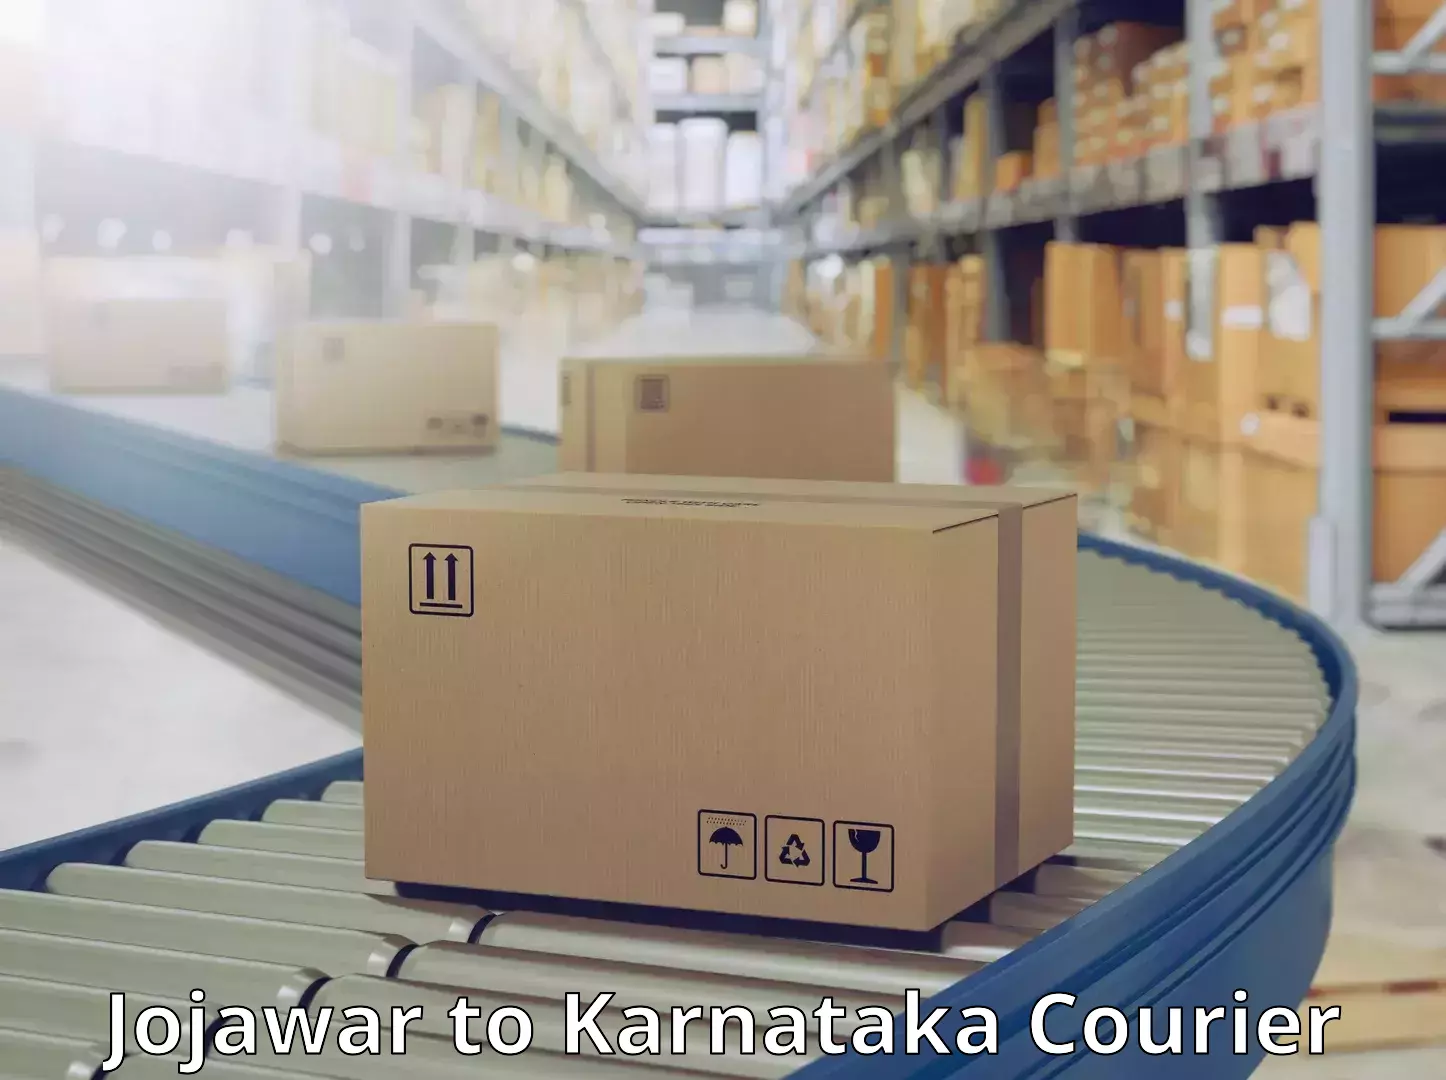 End-to-end delivery Jojawar to Karnataka